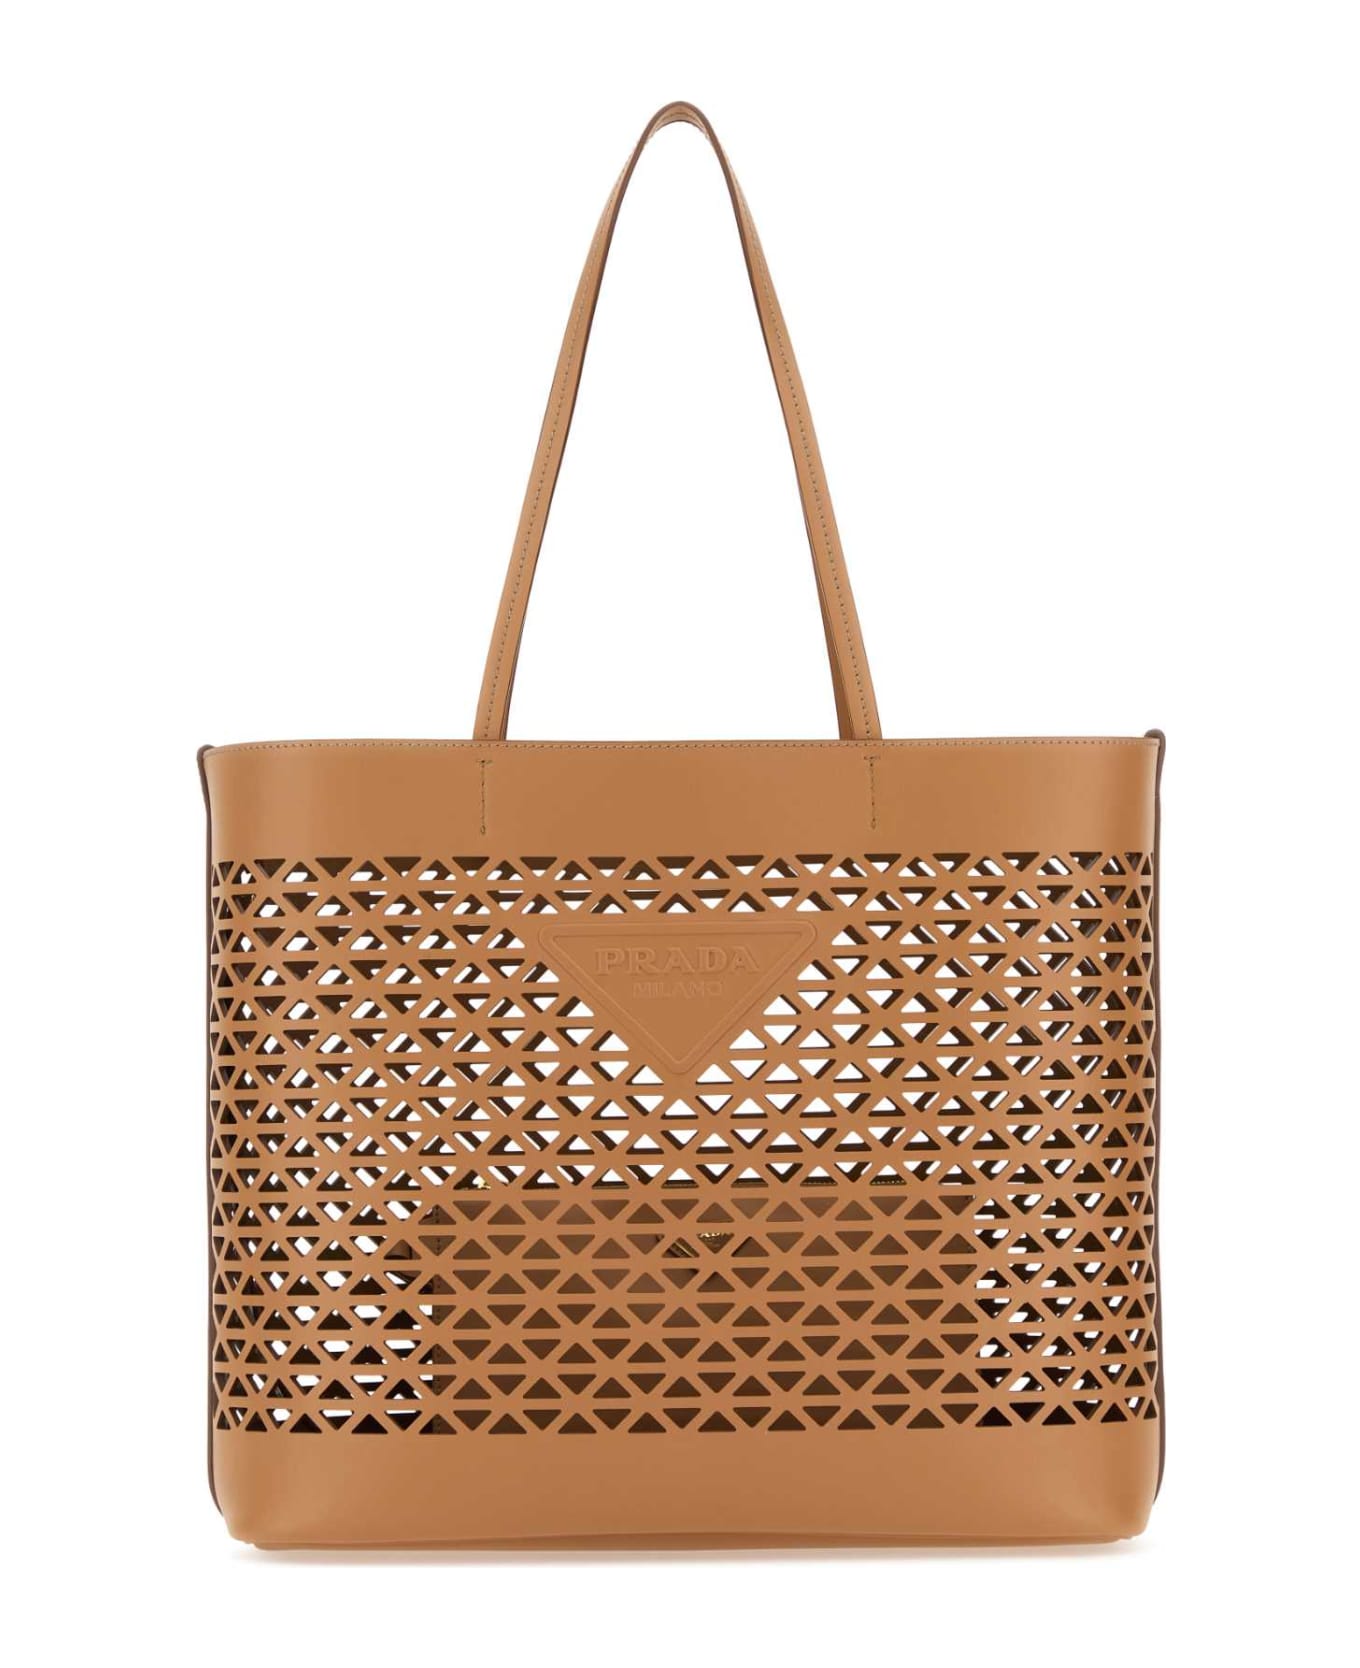 Prada Sand Leather Shopping Bag - NATURALE トートバッグ